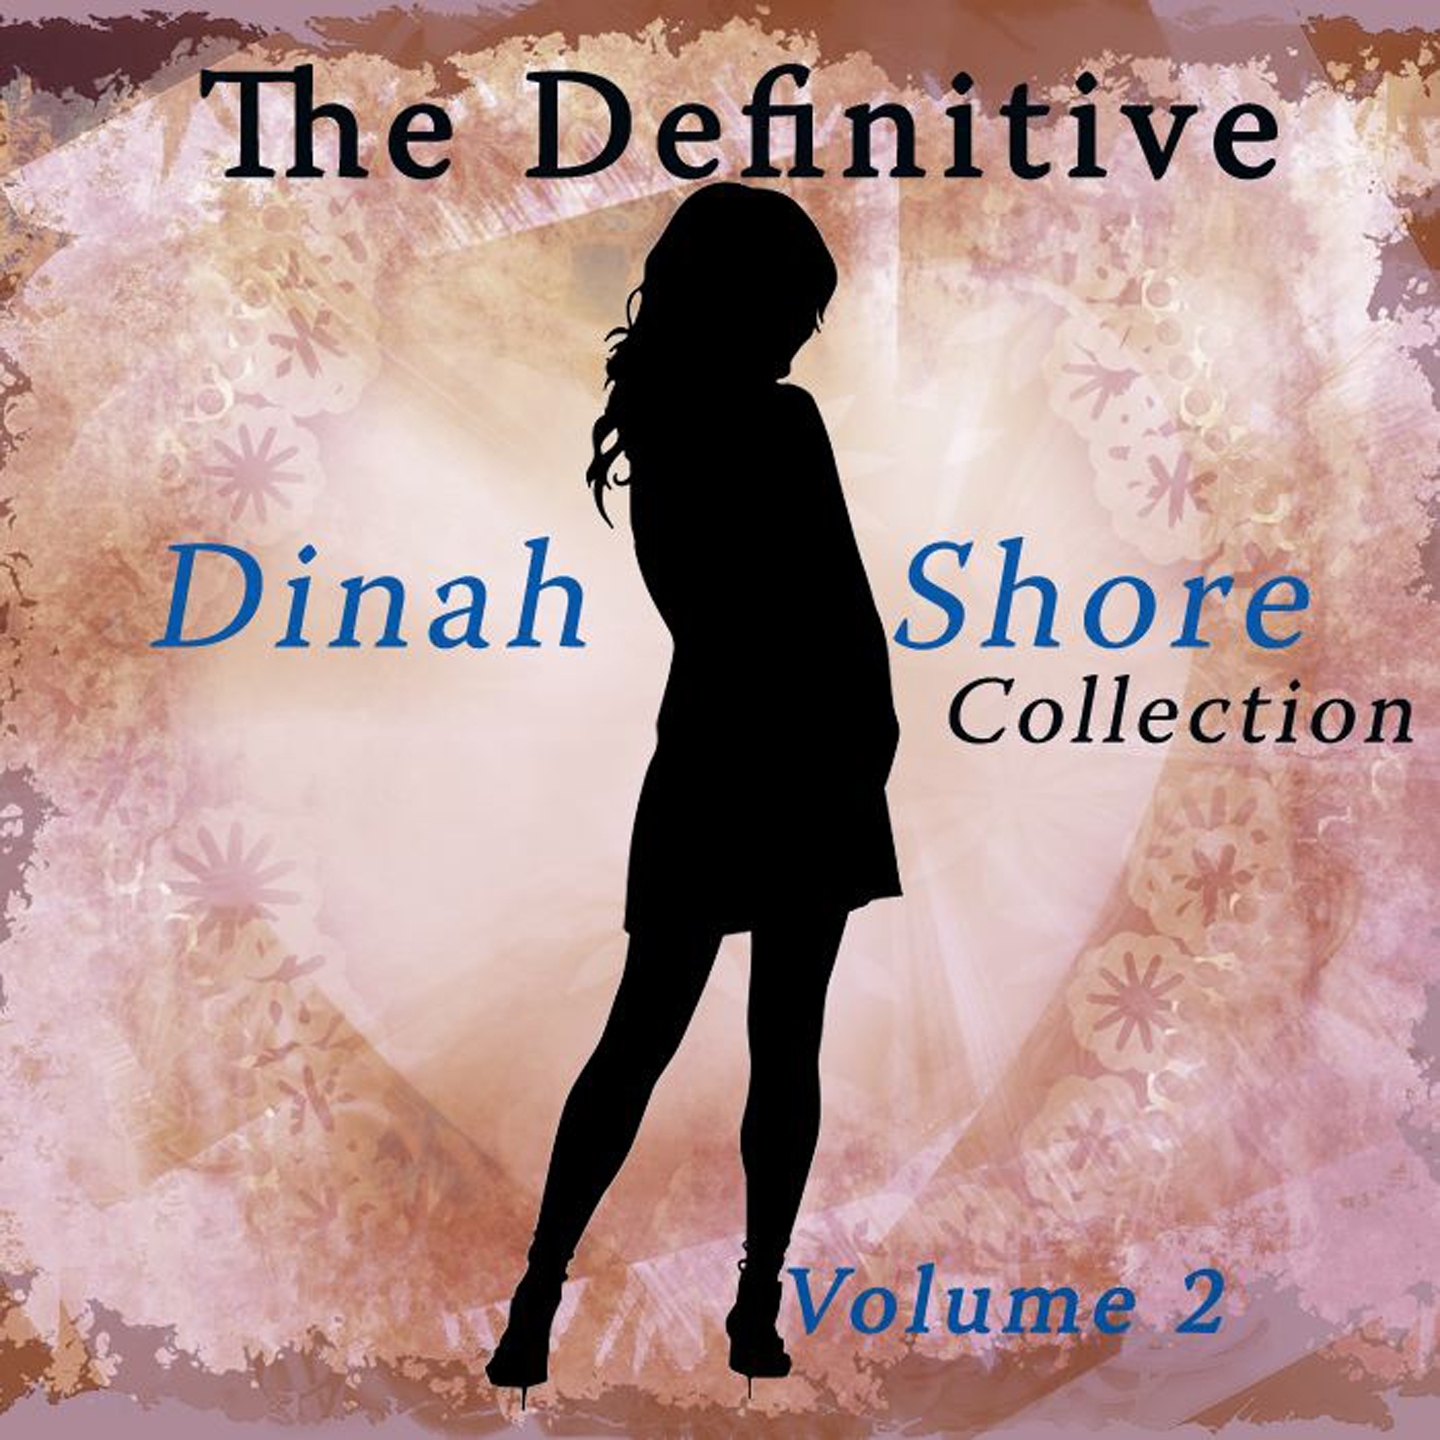 The Definitive Dinah Shore Collection, Vol. 2